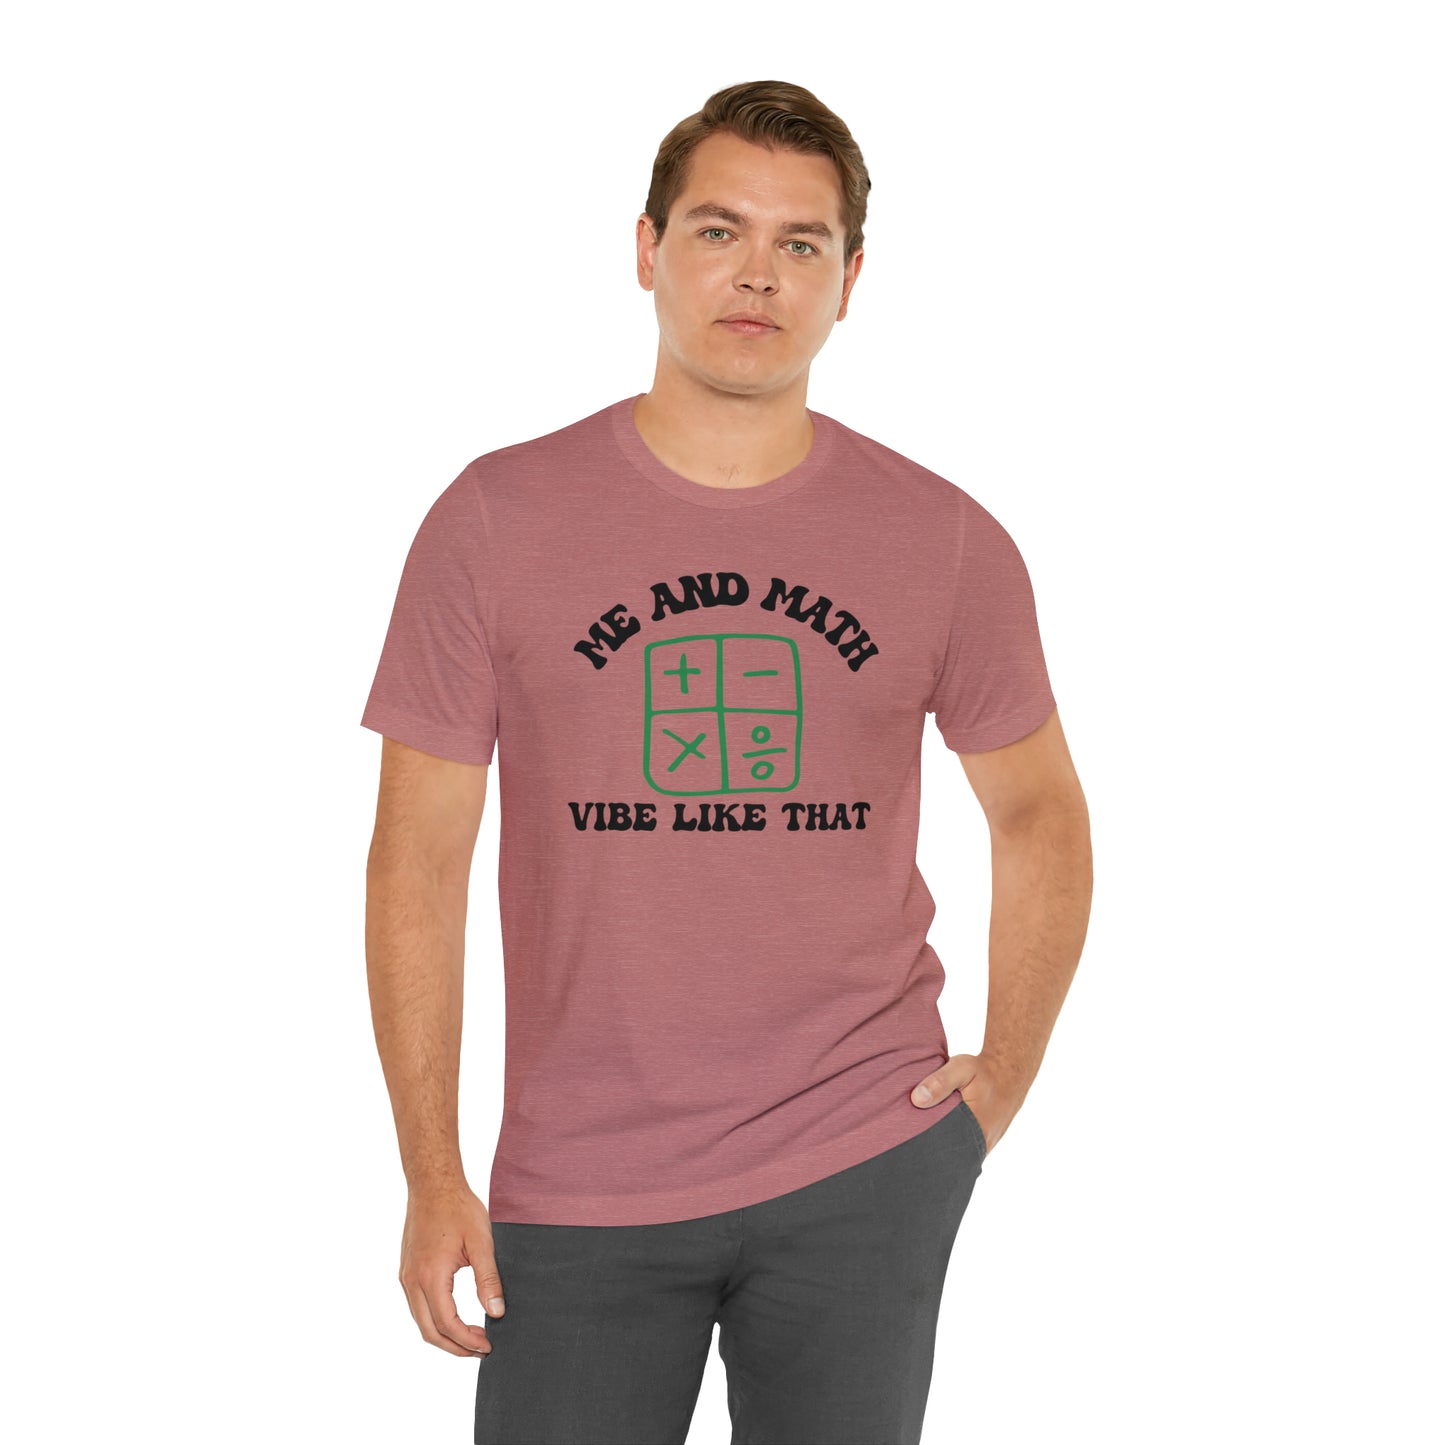 Teacher Appreciation, Math is Life, Me and Math Vibe Like That Shirt, Retro Math Shirt, Vibe Shirt, T502